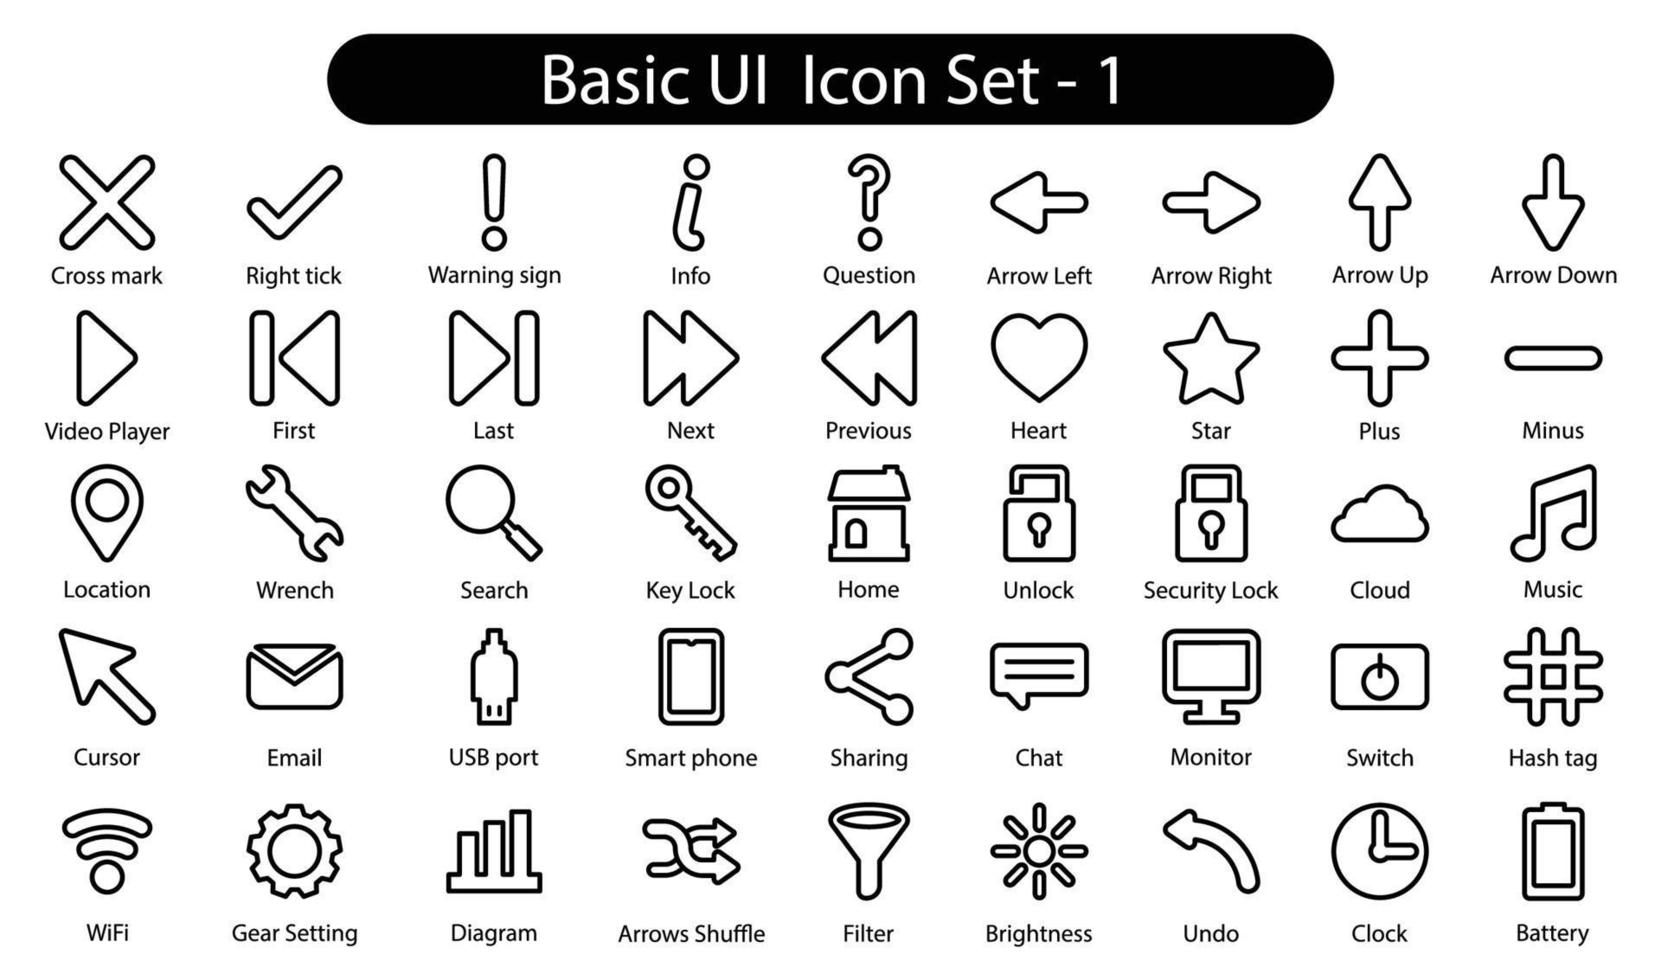 Grundlegende UI-Linien-Icon-Set vektor